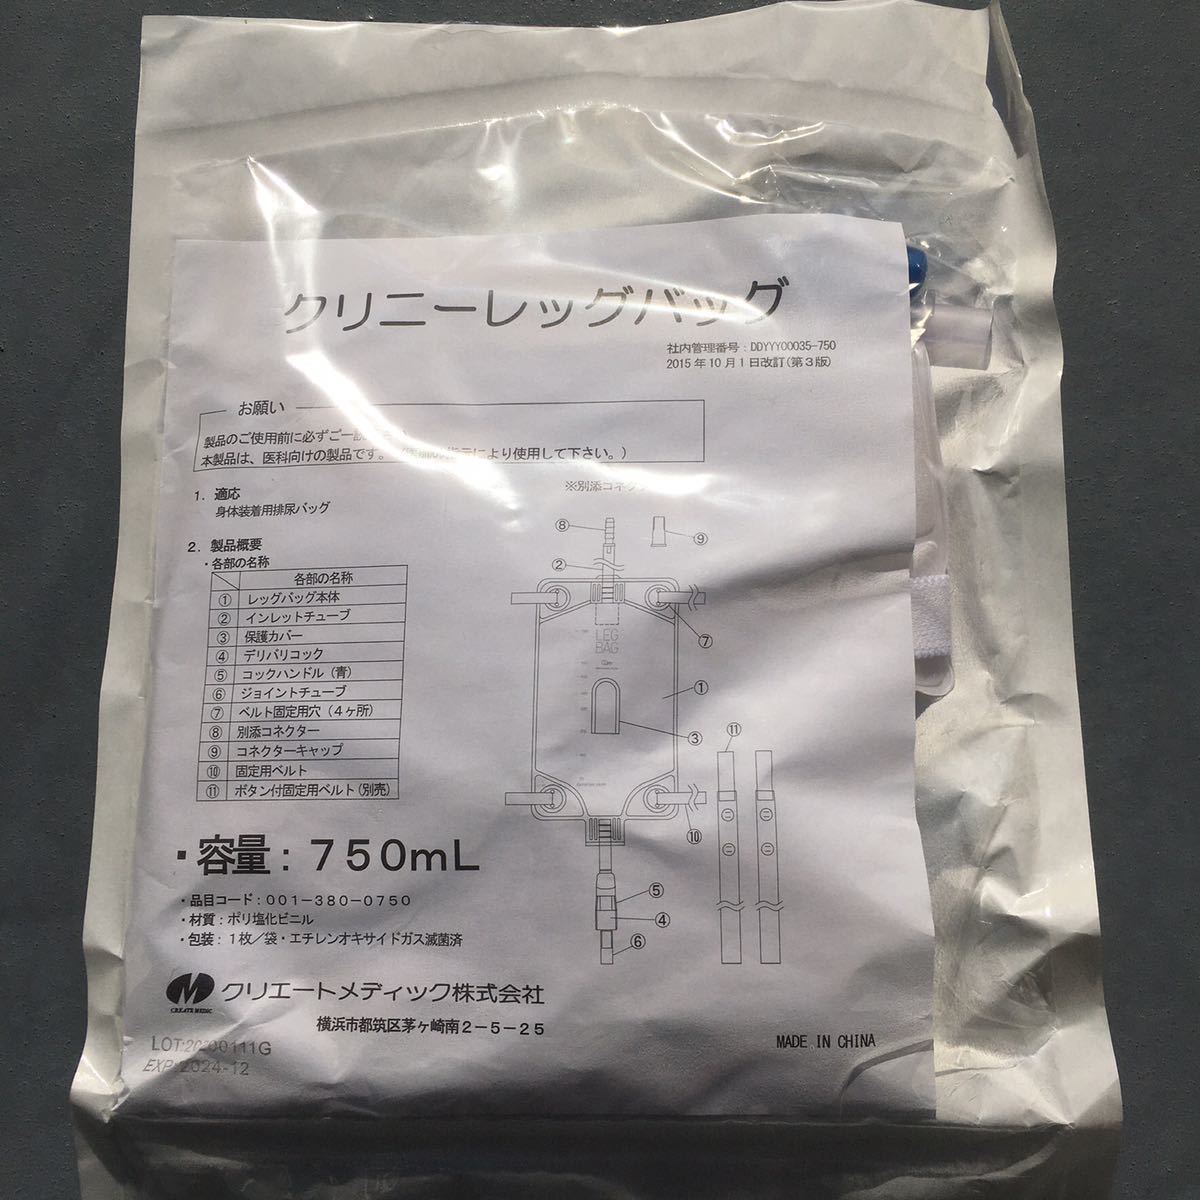 kli knee leg bag 750mL unused unopened 9 sack set klie-tome Dick company manufactured catheter separate 